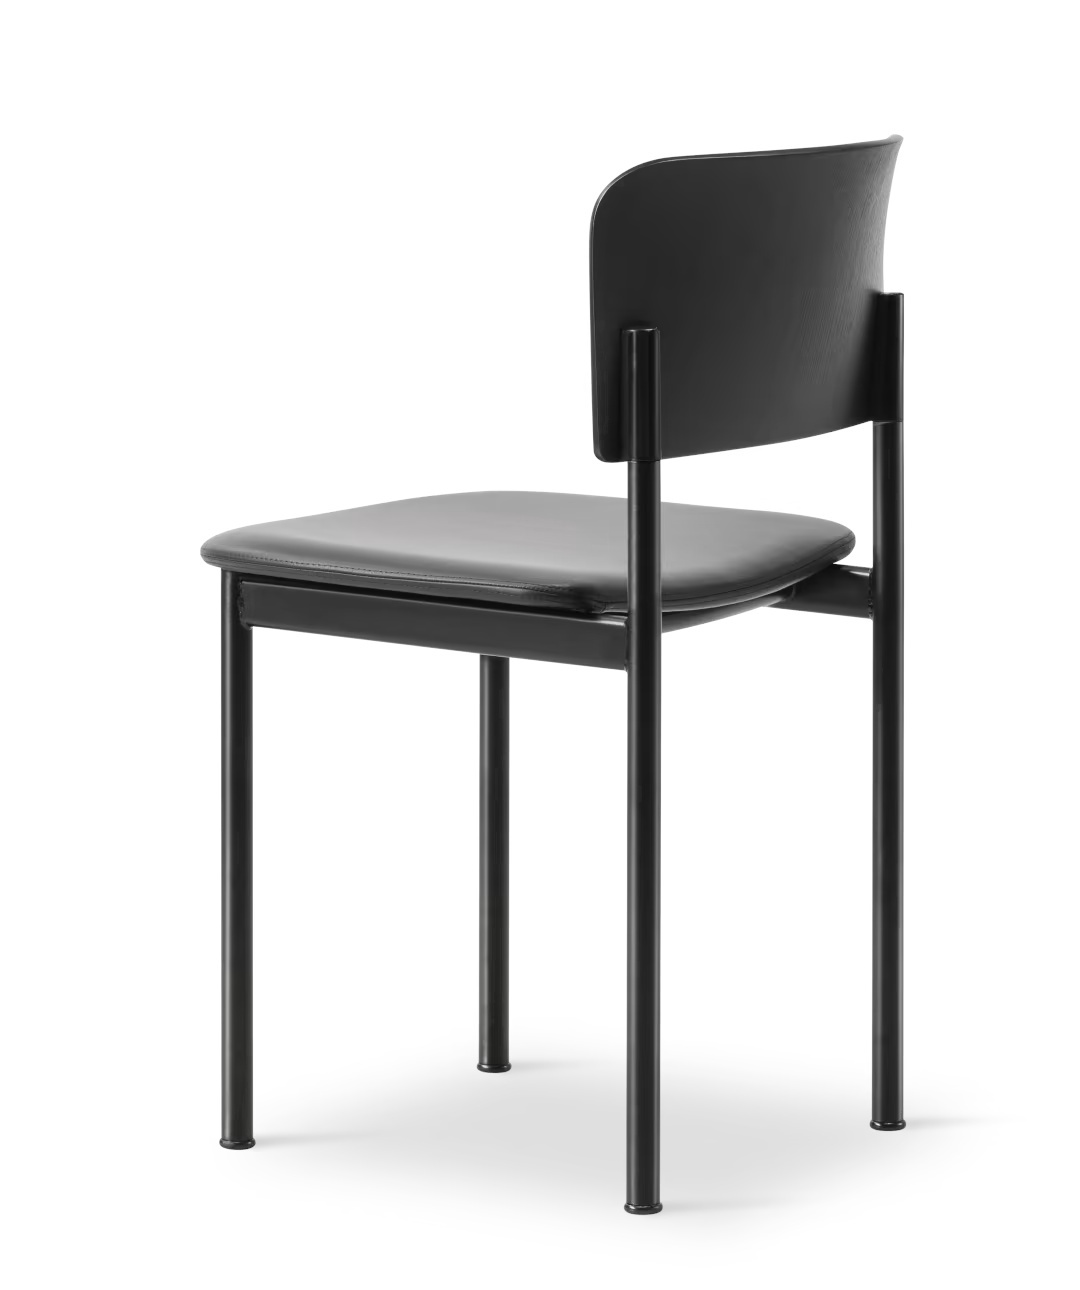 Plan Chair Sitz gepolstert, eiche lackiert / re-wool 128